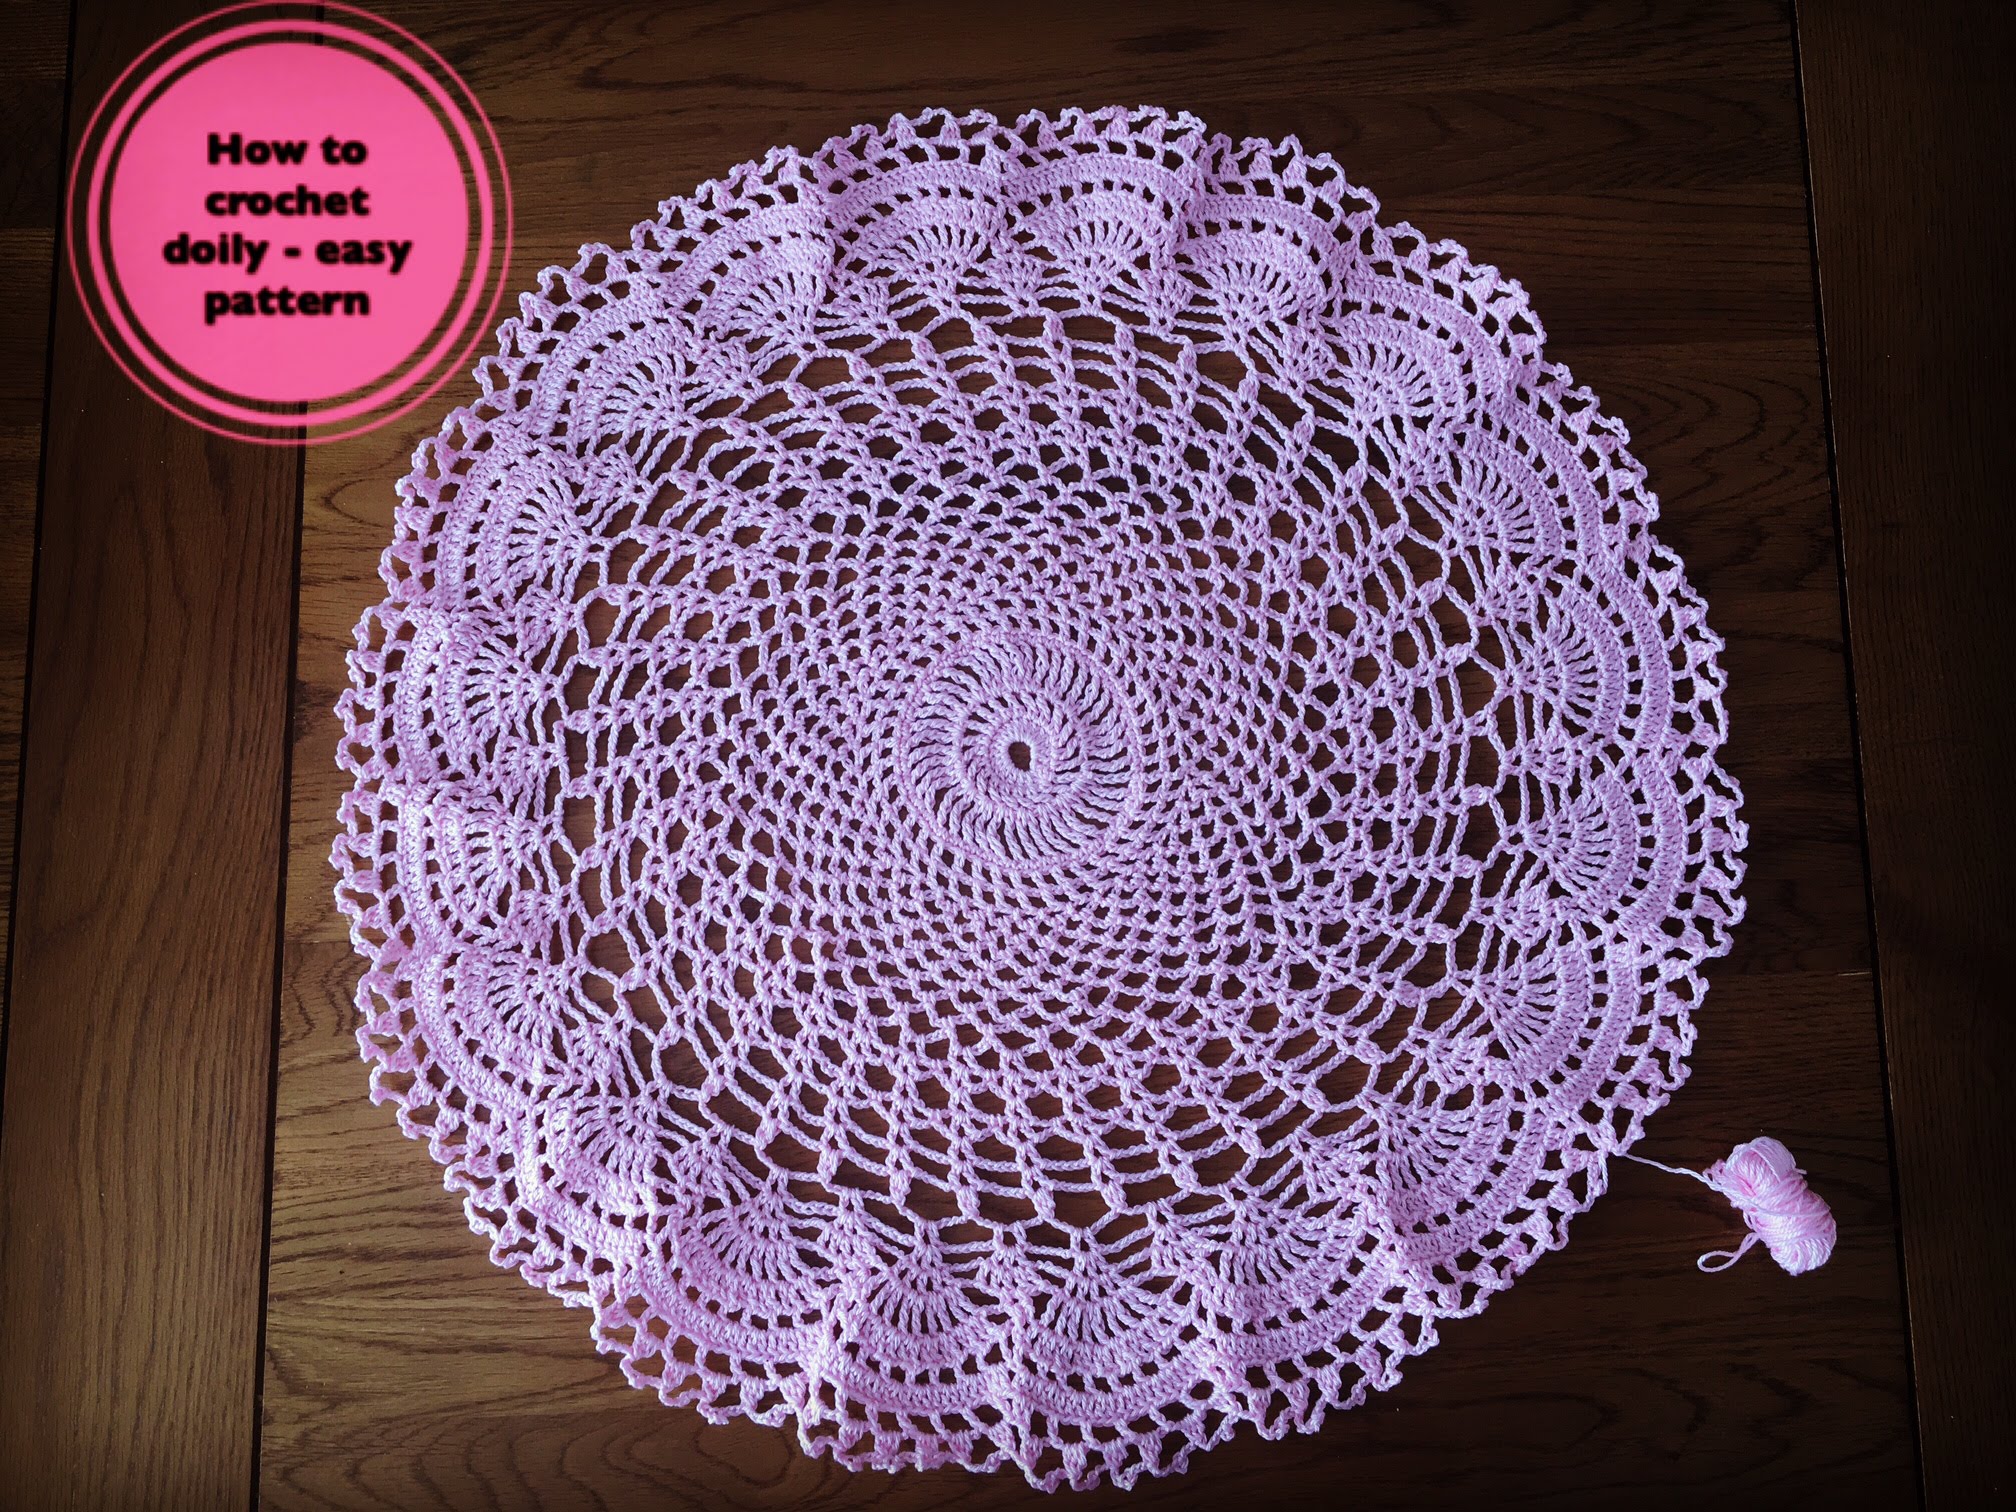 crochet doilies how to crochet doily - easy pattern - youtube THVATZL